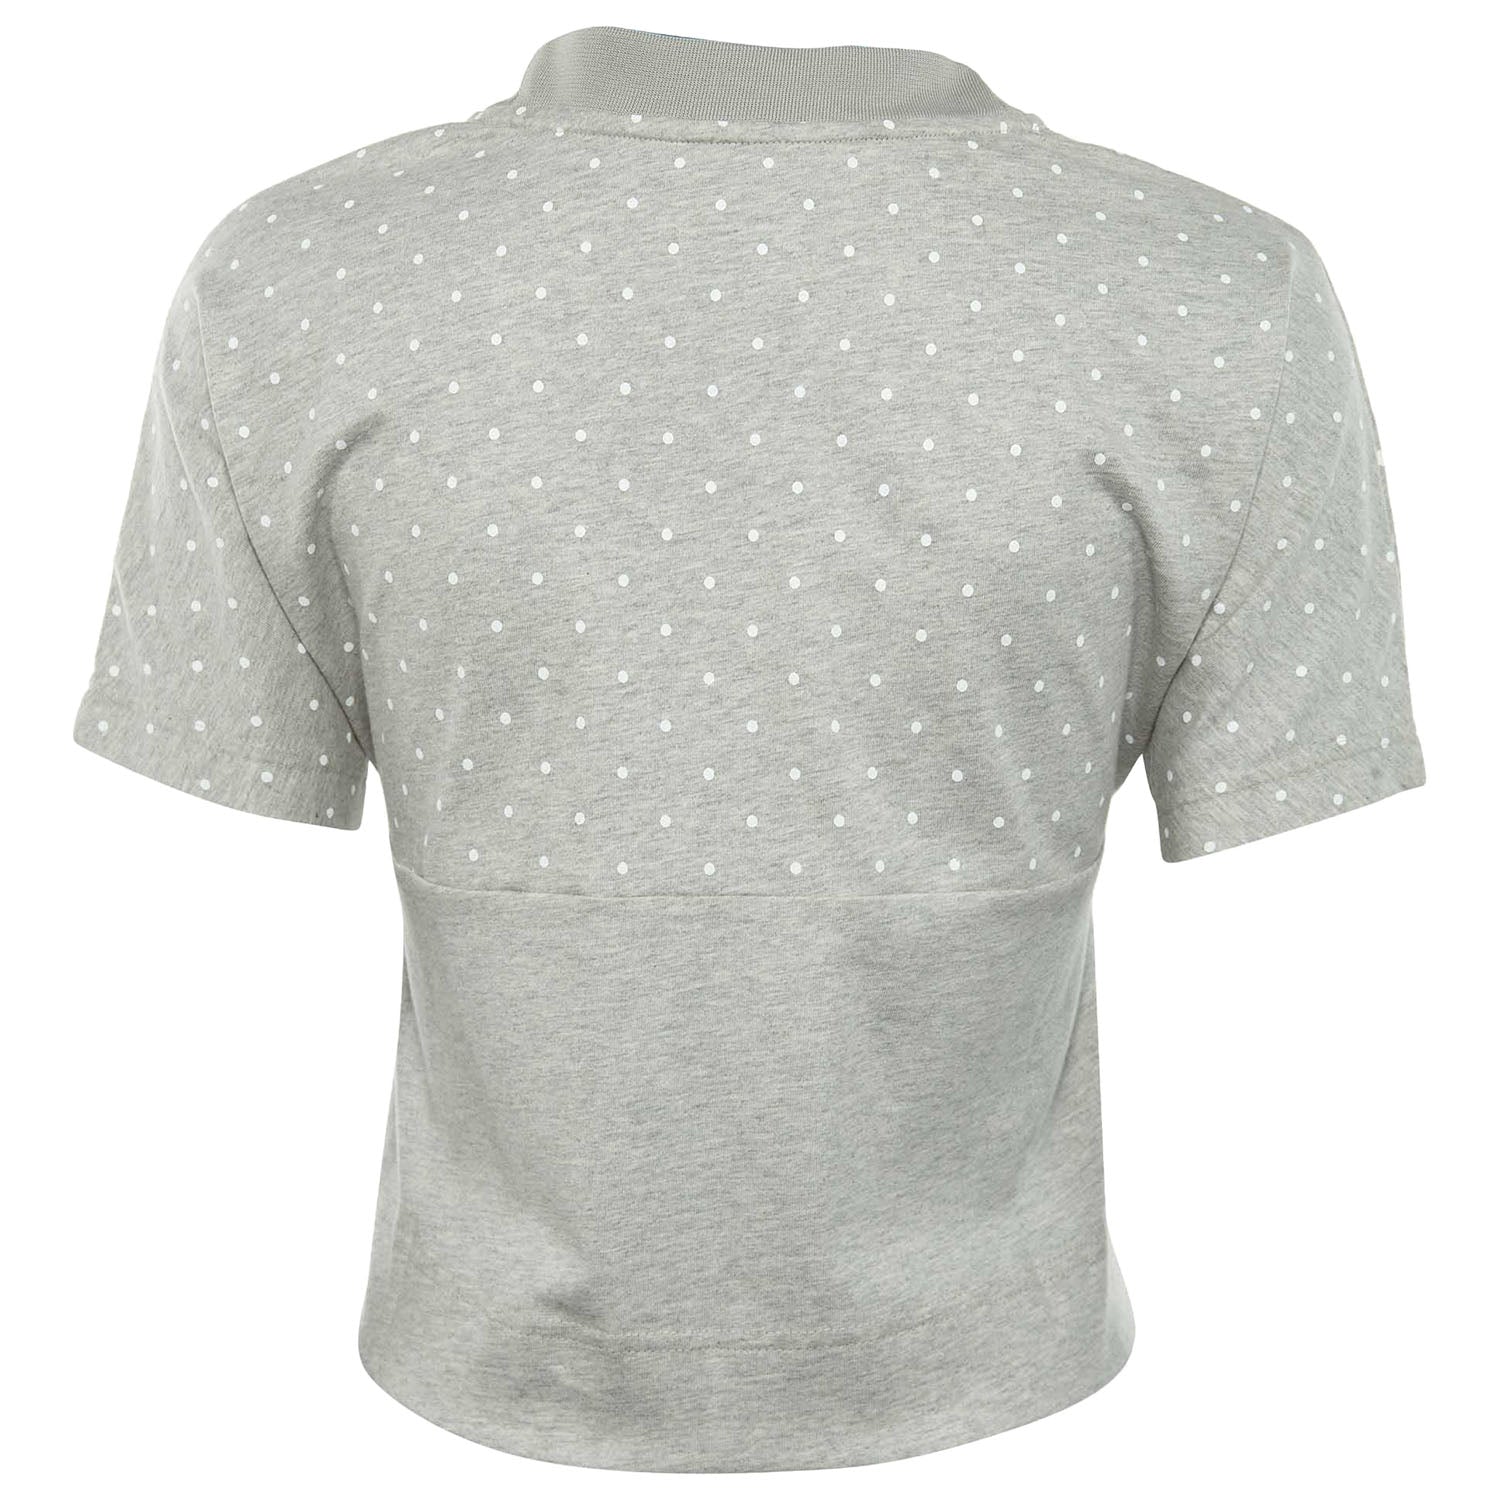 Nike Nsw Cropped T-shirt Womens Style : 930539